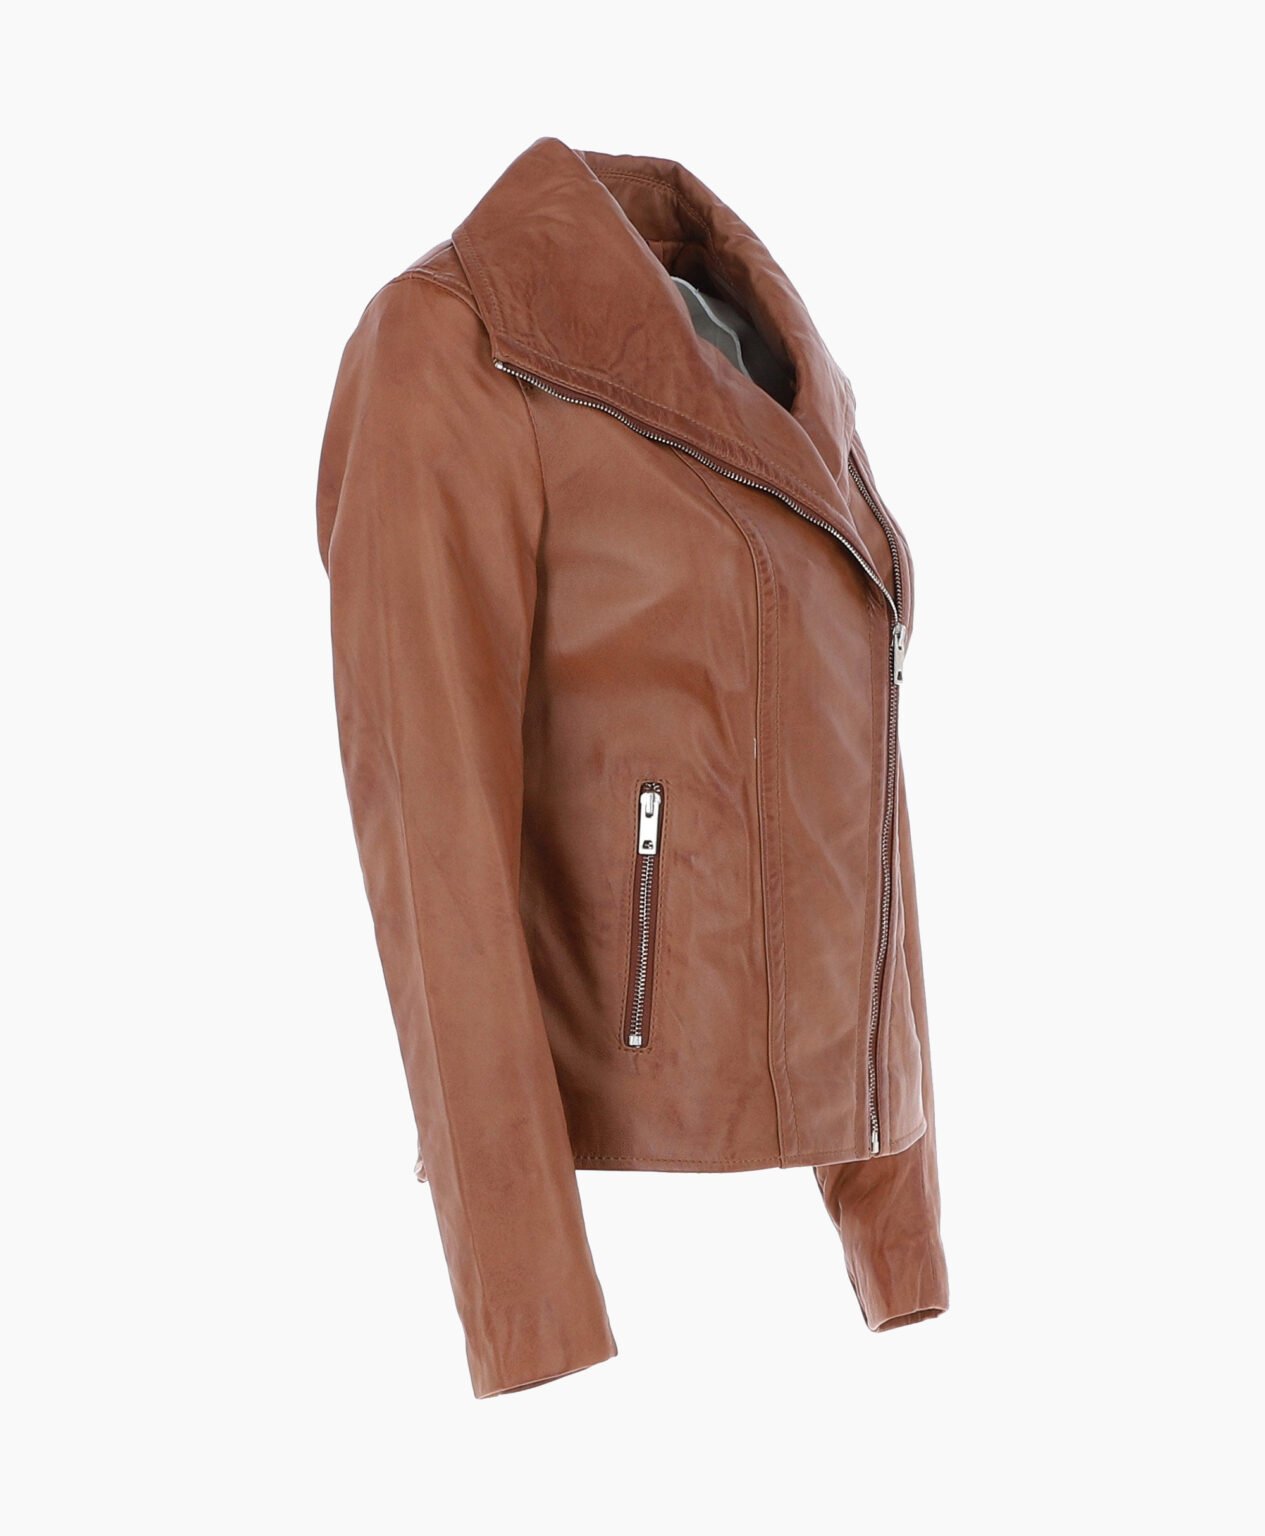 vogue-jacket-leather-jacket-fashion-collar-tan-shelby-image203